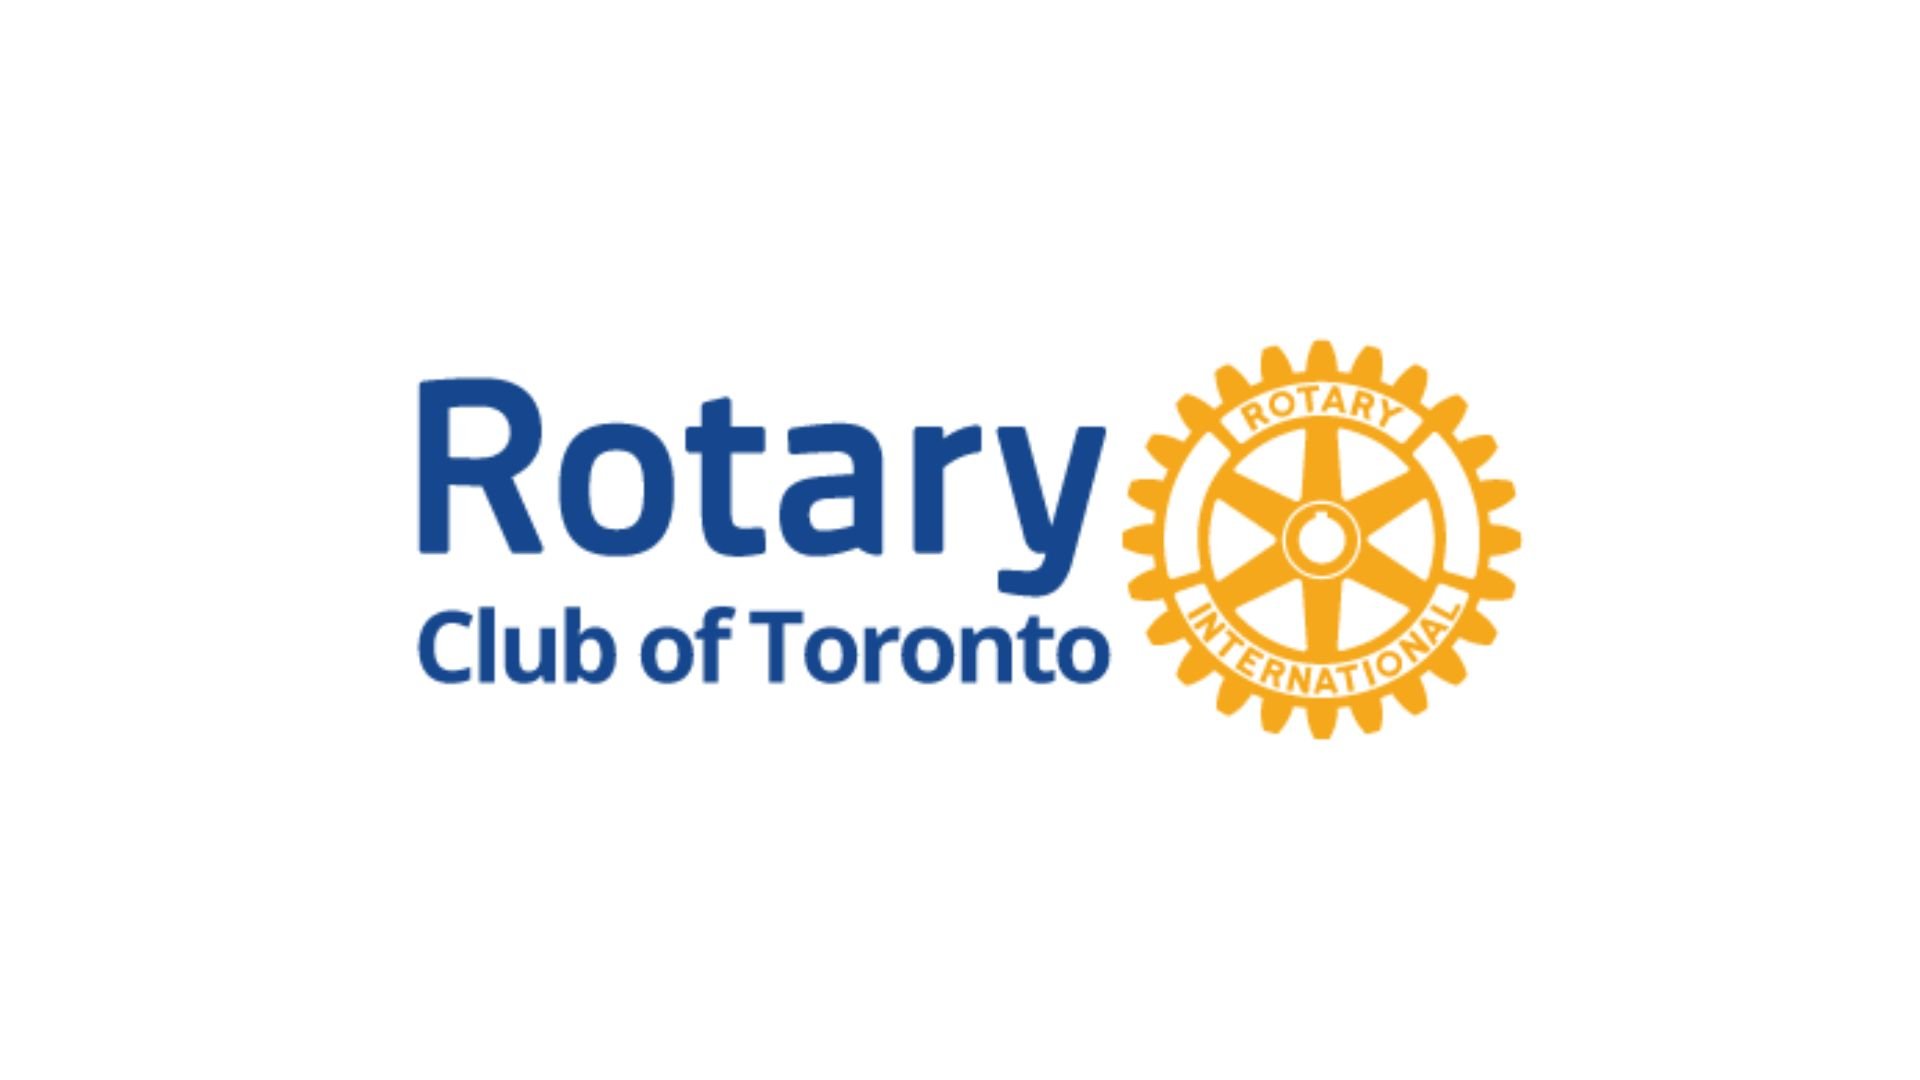 Rotary Club of Toronto Logo.jpg